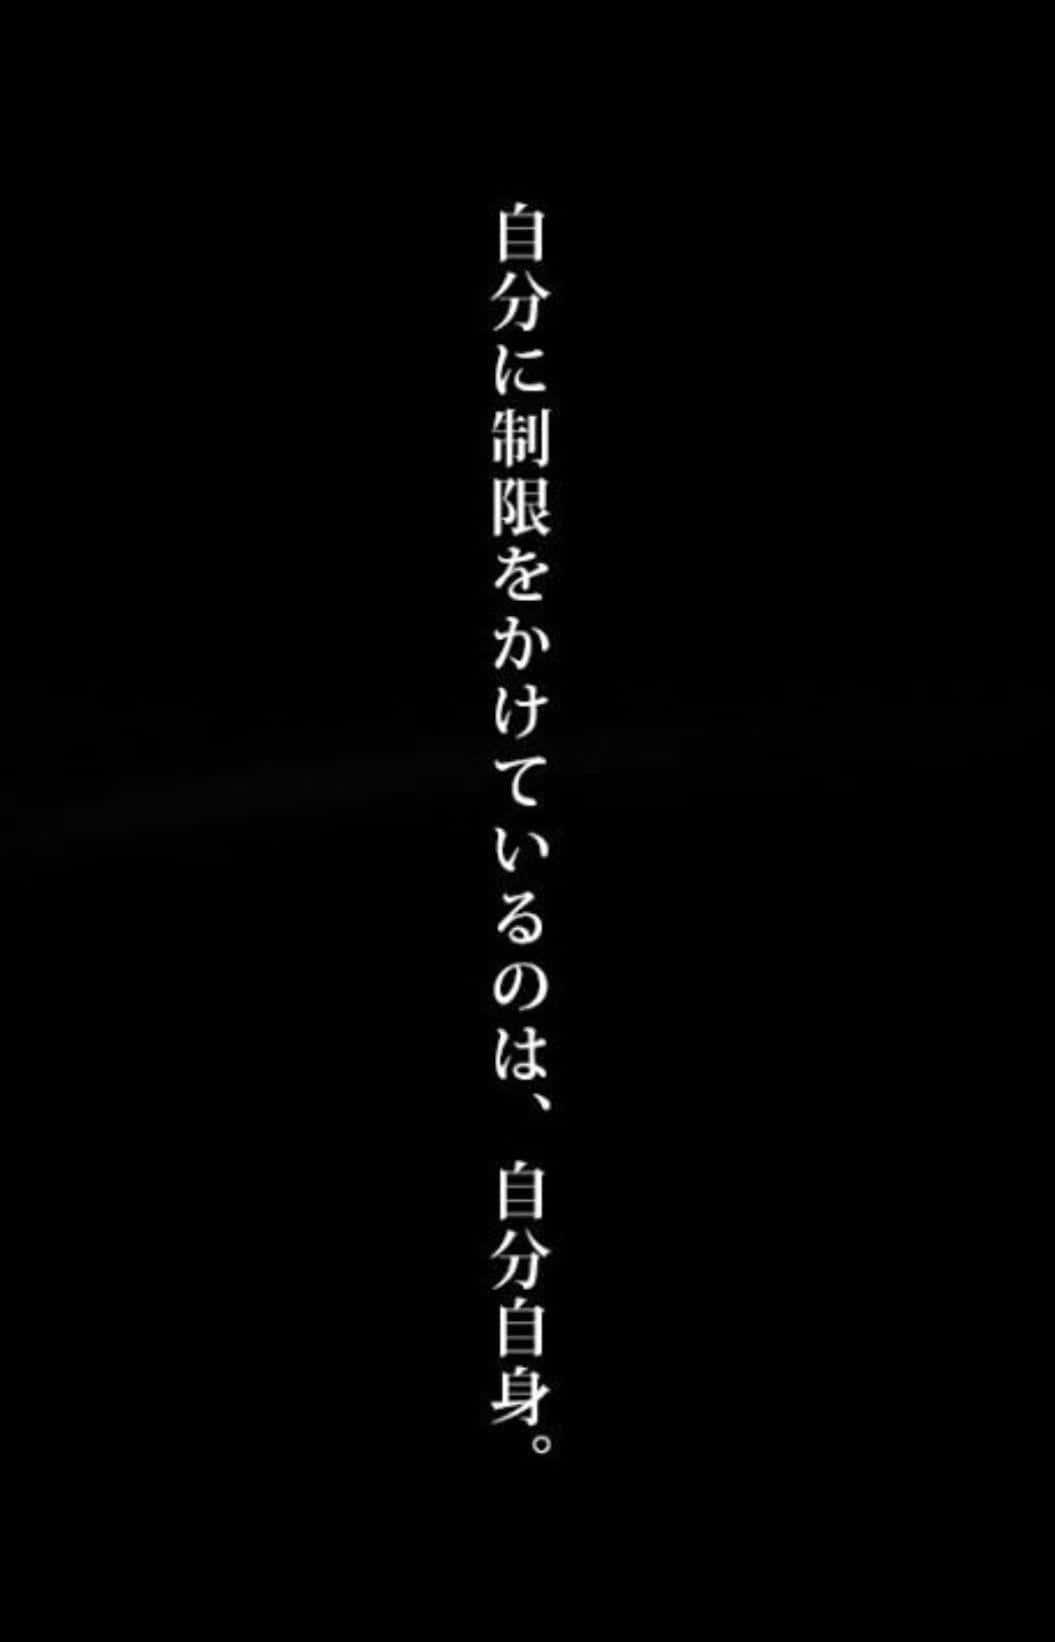 Download White Text Japanese Aesthetic Black Wallpaper